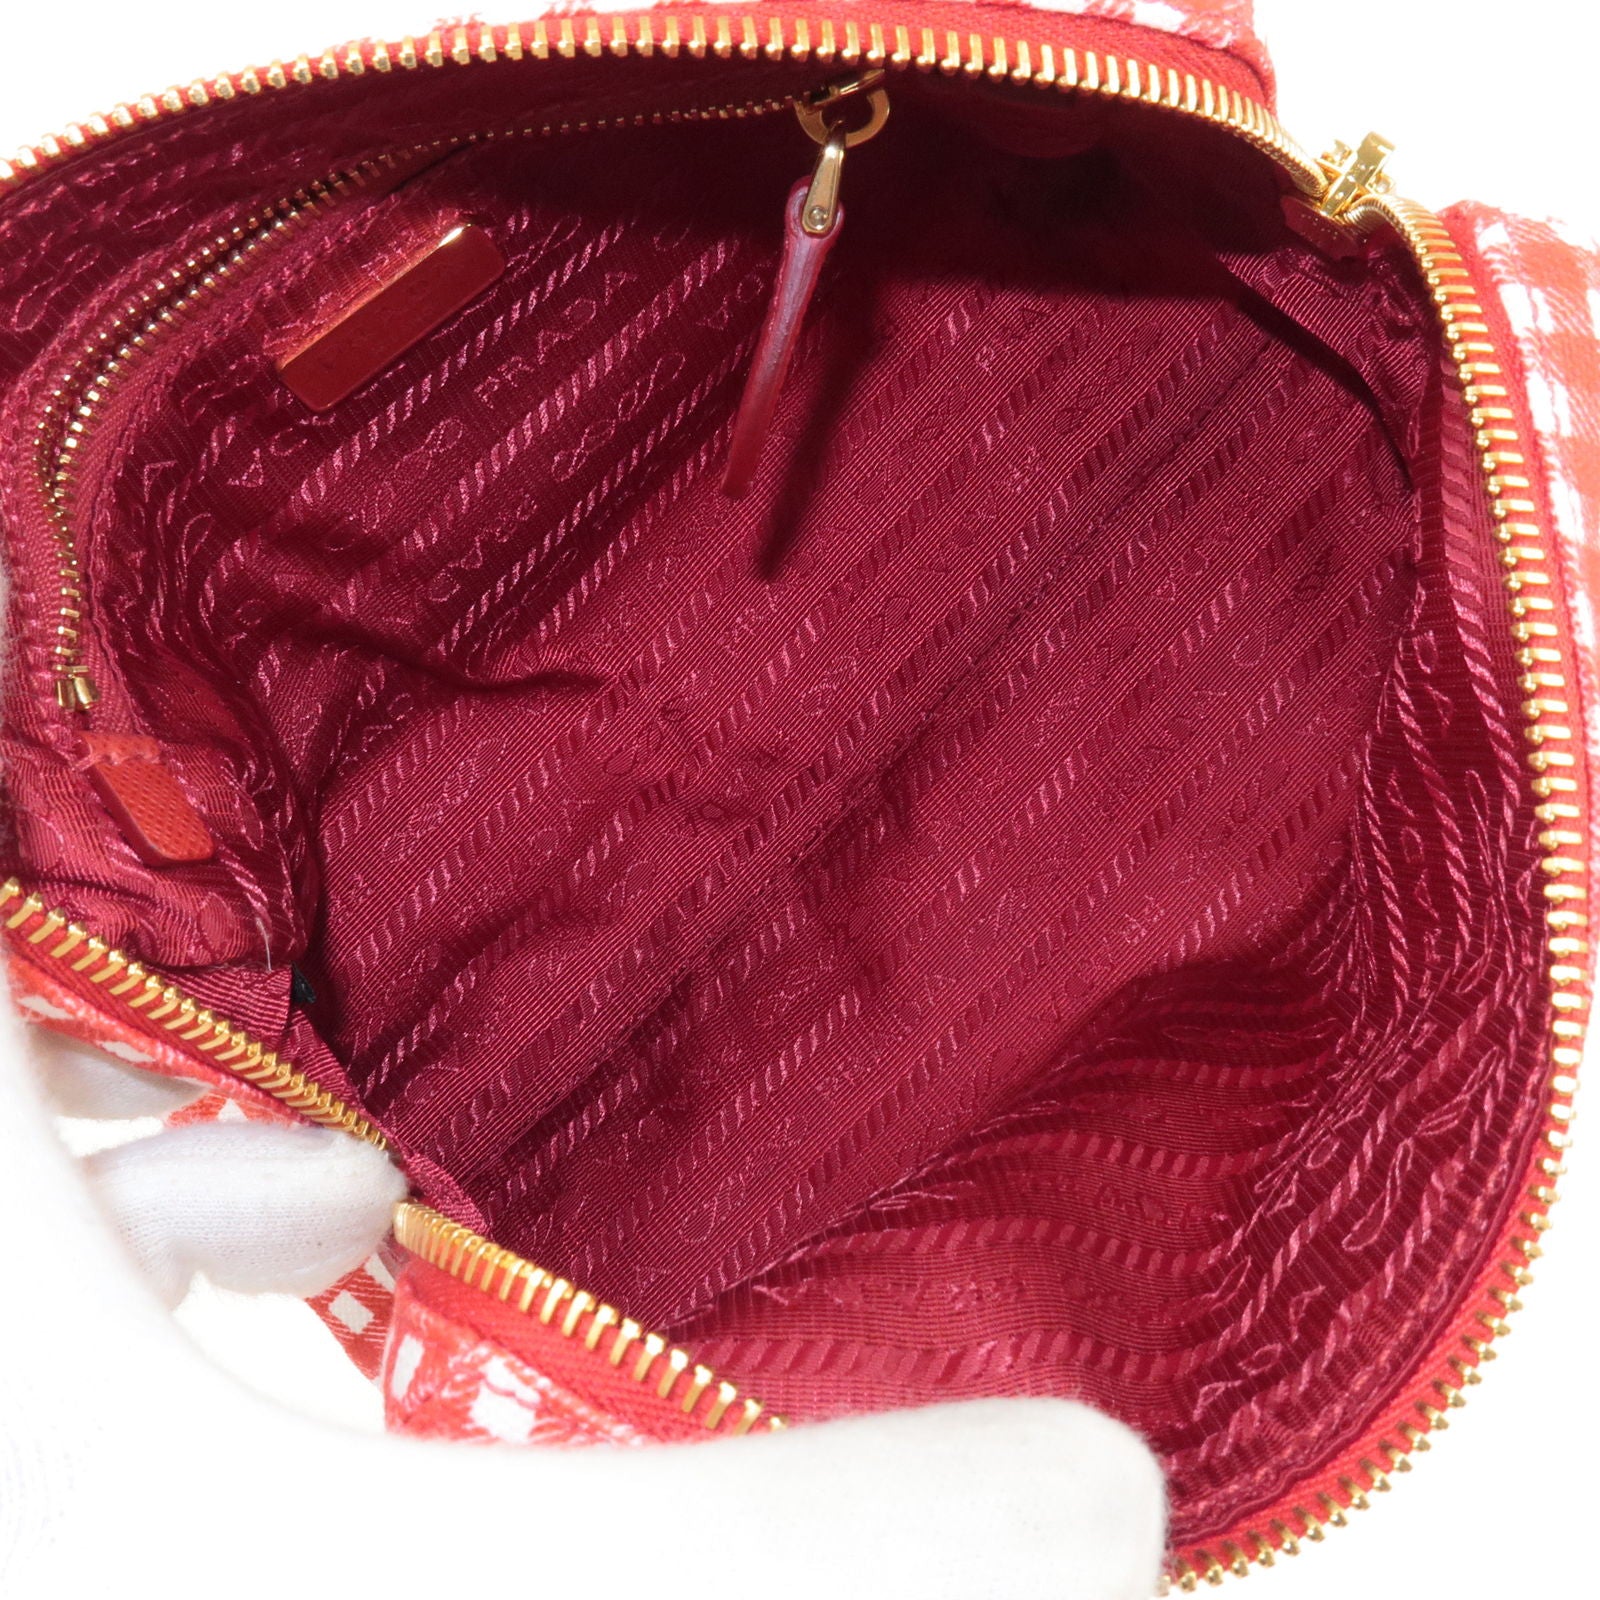 Checkered Zipper Makeup Bag Pink and Red